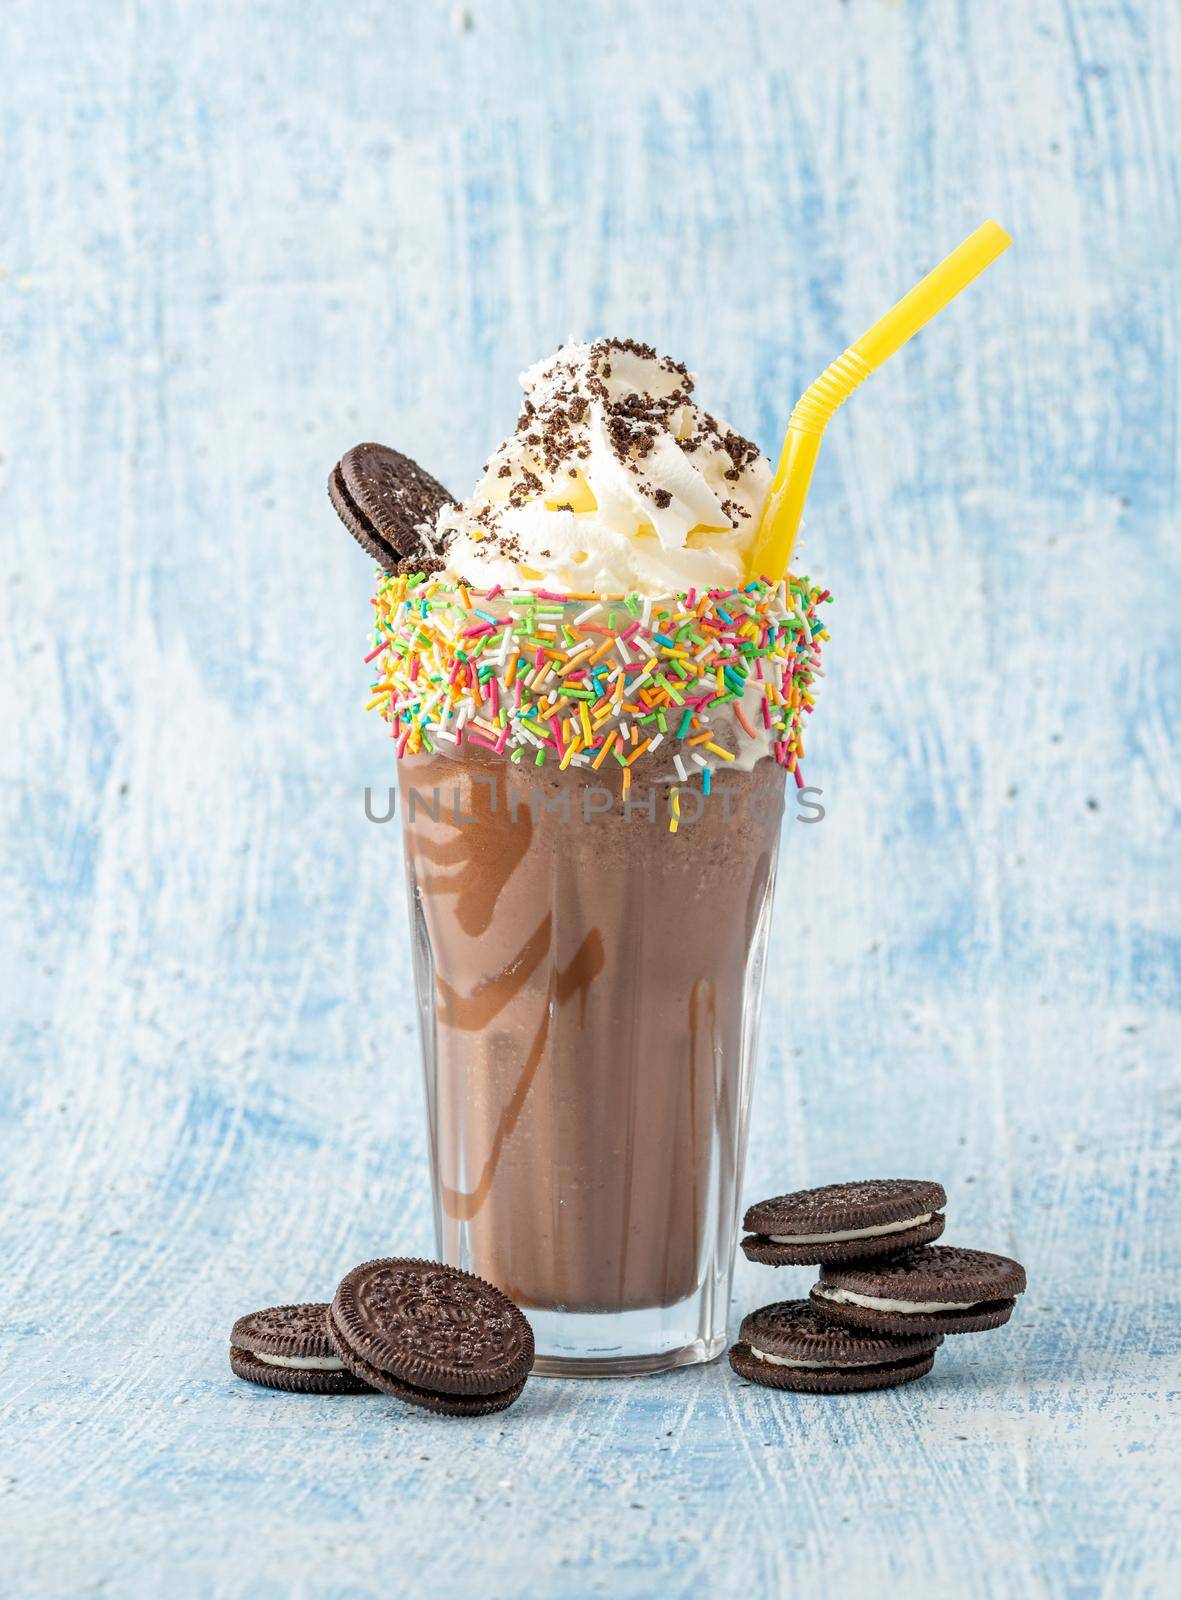 Cream and chocolate milkshake on blue background by Sonat